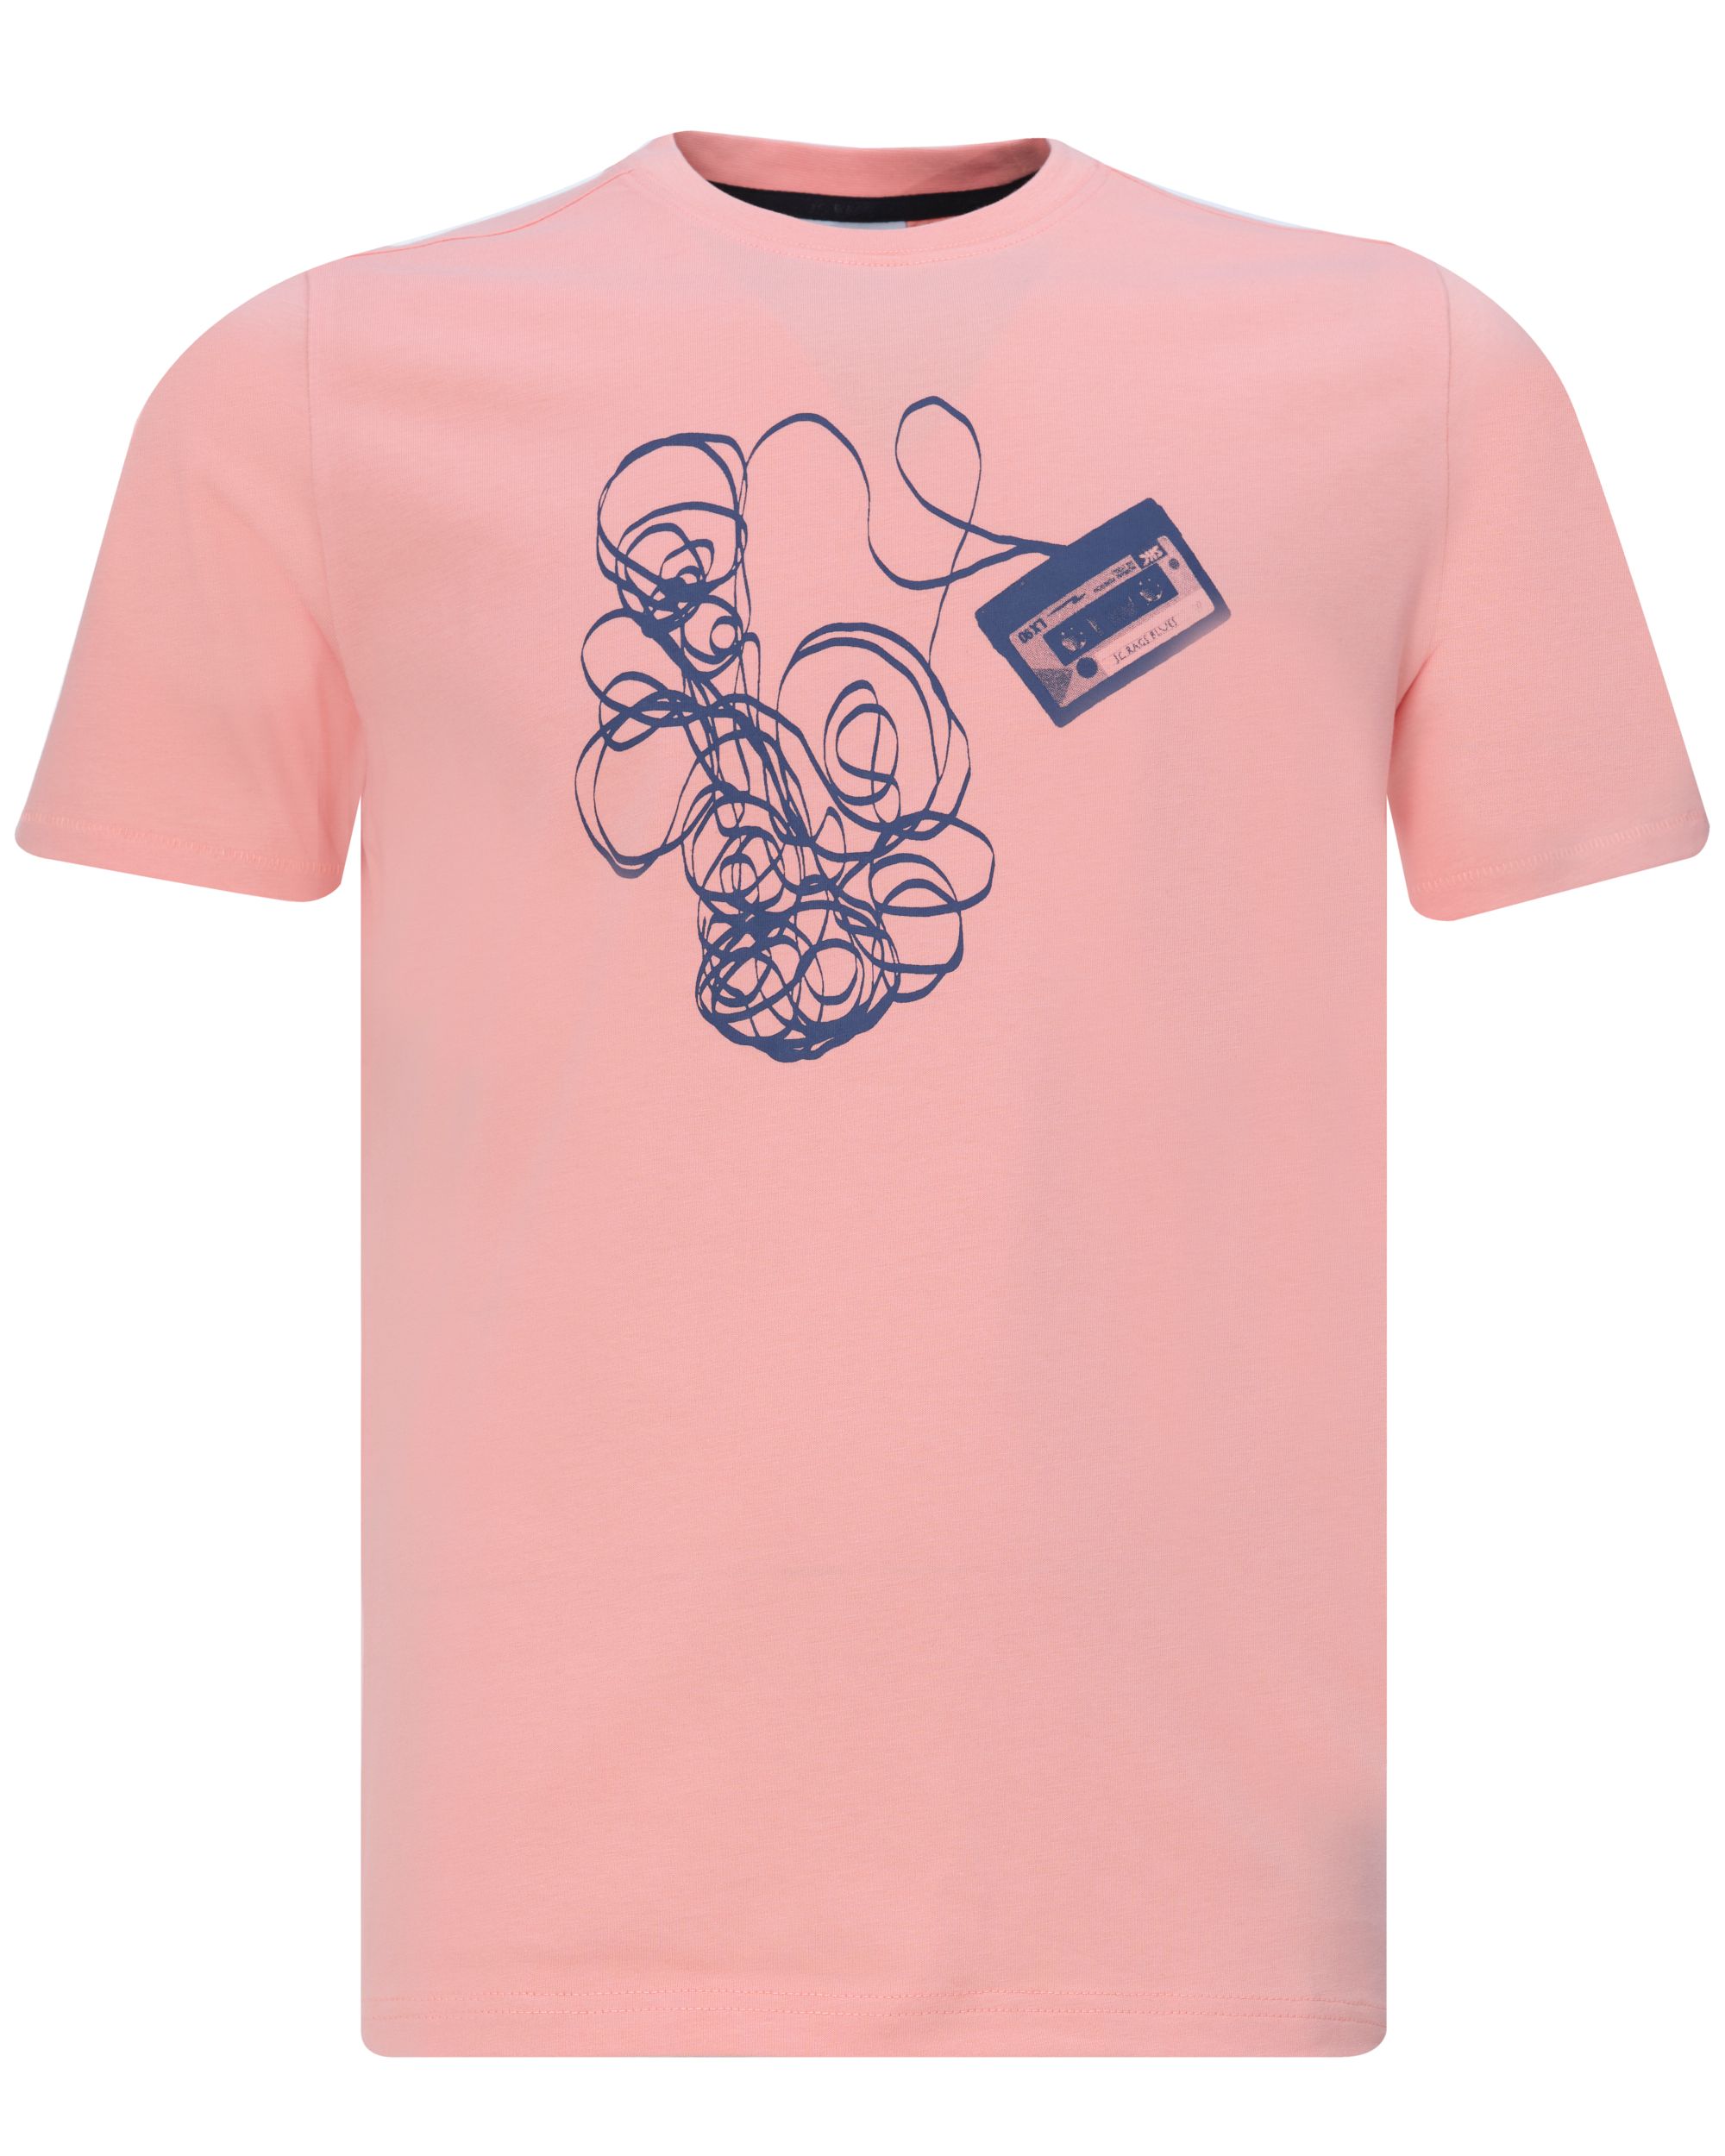 J.C. RAGS T-shirt KM Shrimp 081506-002-L